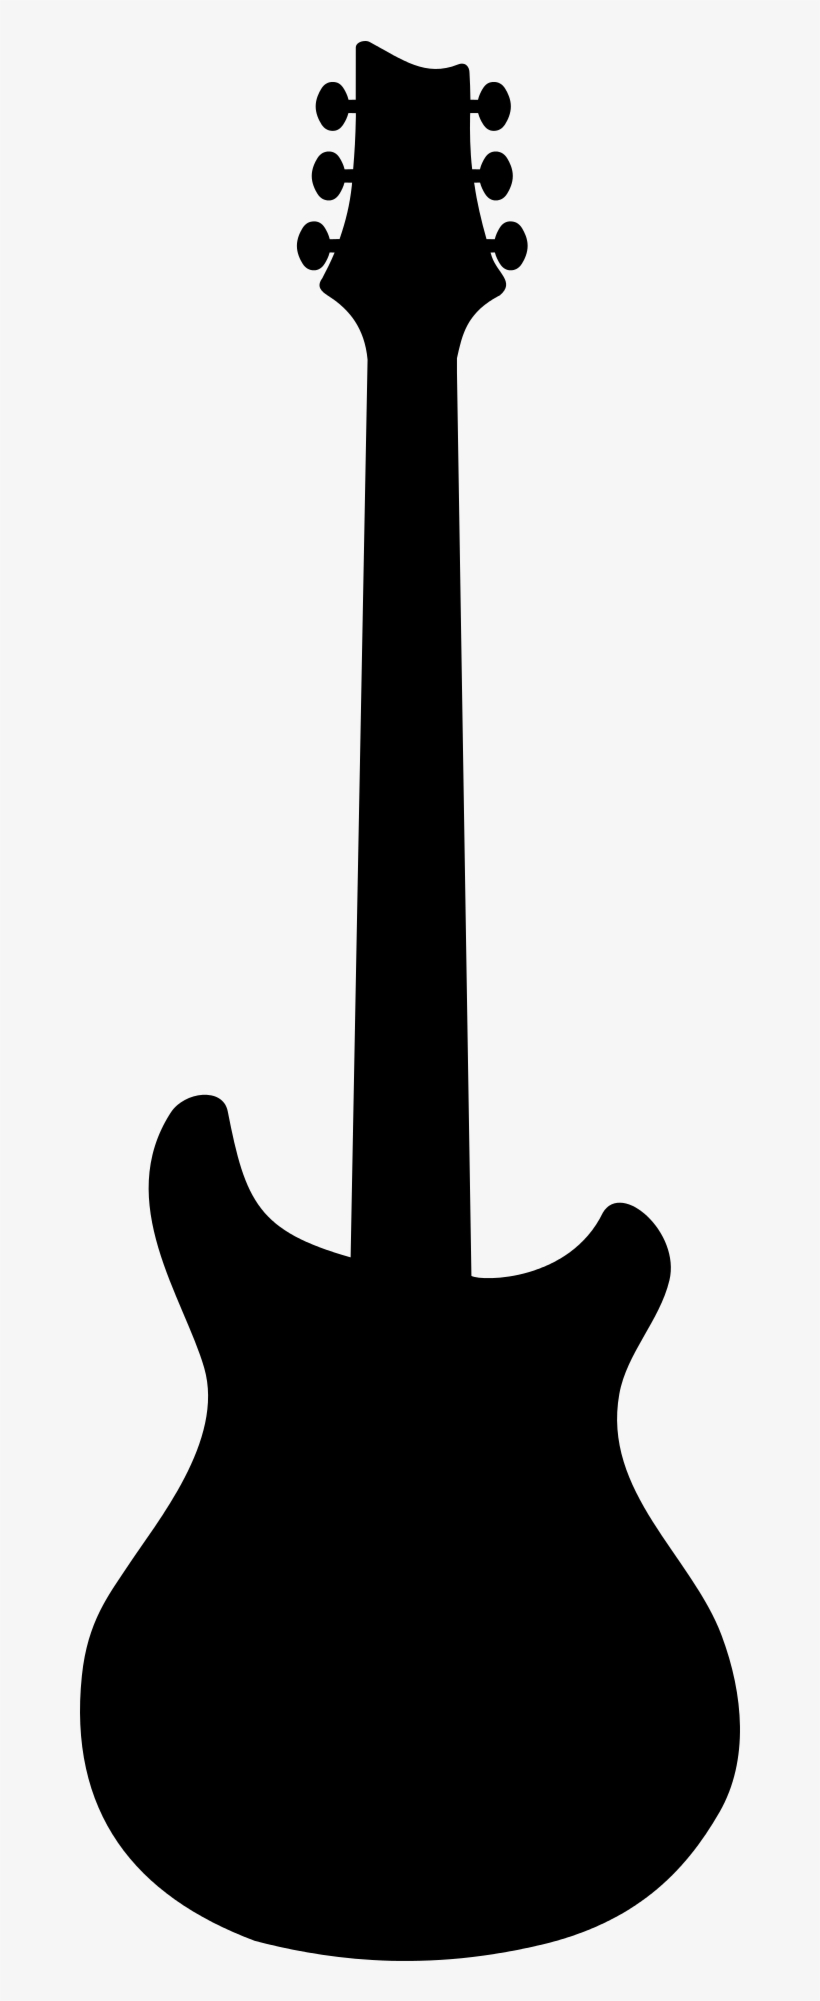 Black Guitar Silhouette - Electric Guitar Silhouette Png, transparent png #758748